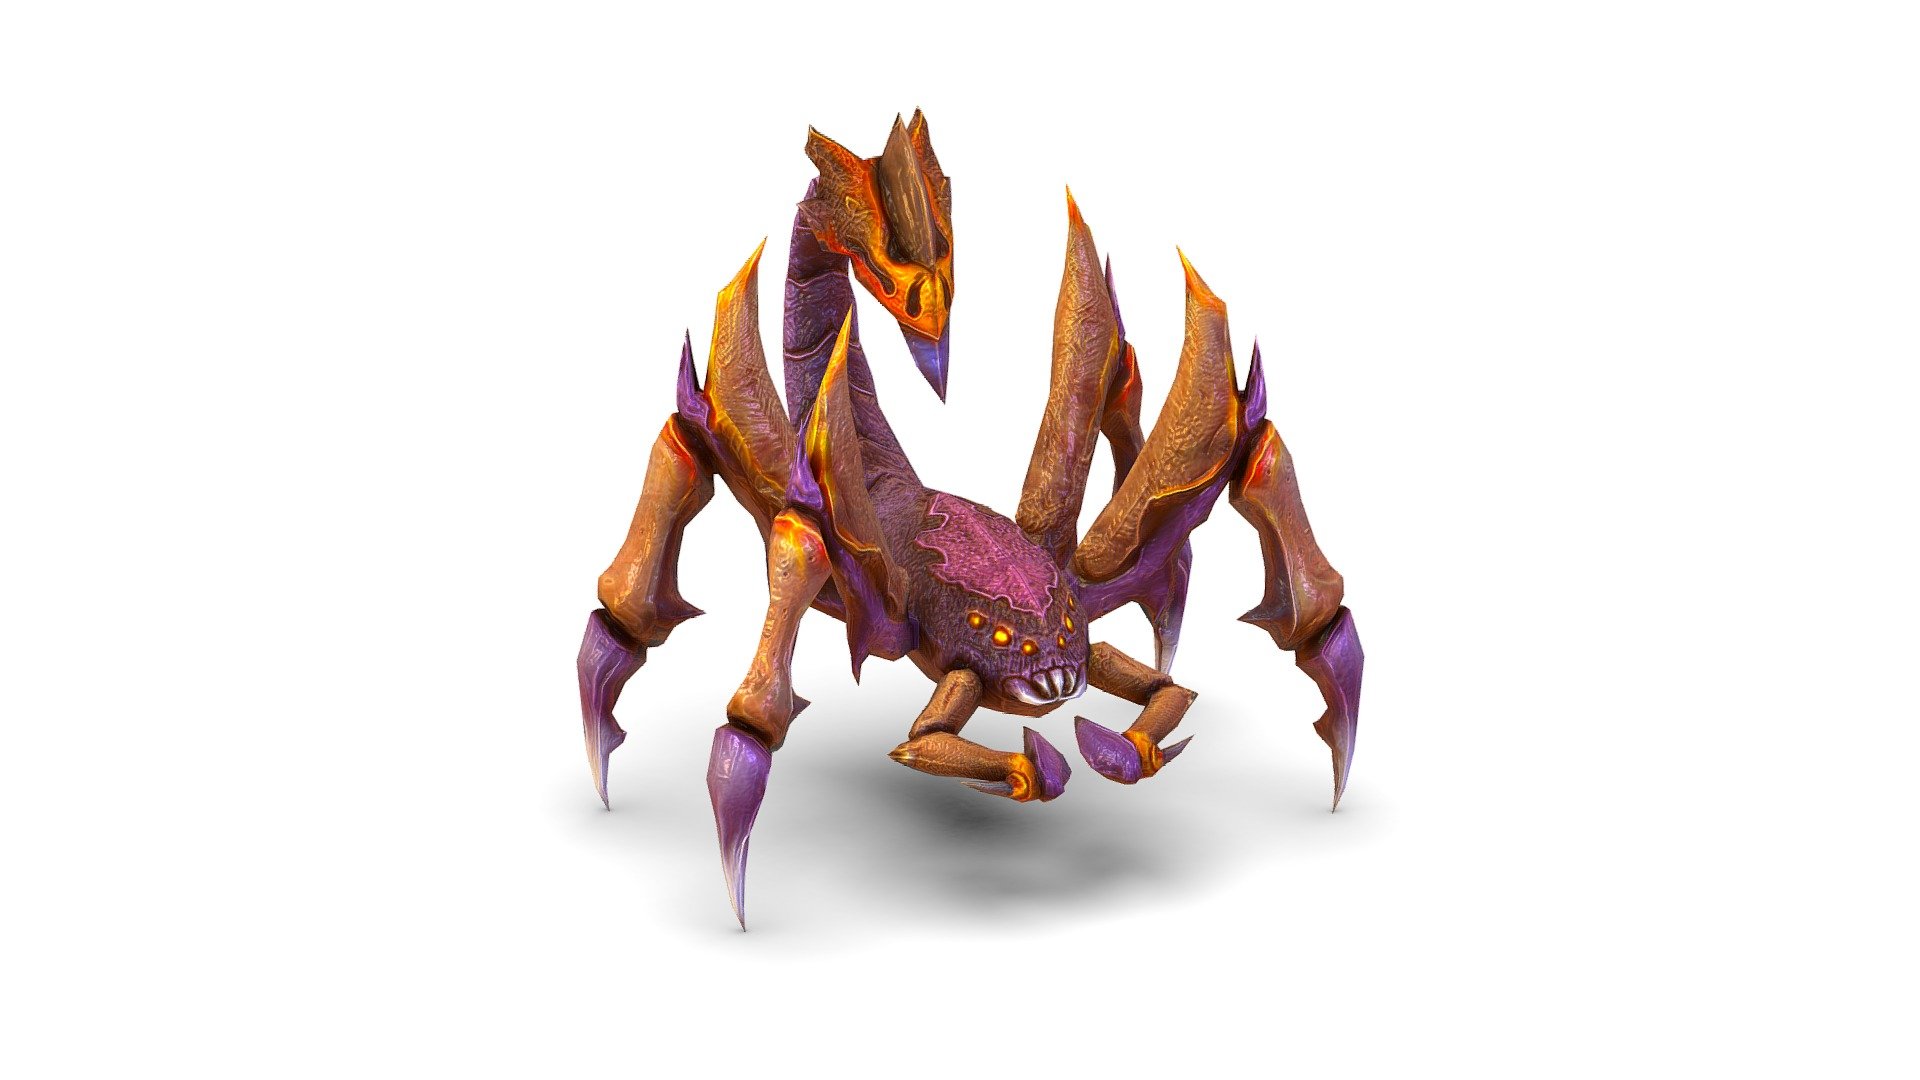 Low Poly Monster Purple Scorpio Creature  - 512x512 color texture only, 3dsMax file included - Low Poly Monster Purple Scorpio Creature - Buy Royalty Free 3D model by Oleg Shuldiakov (@olegshuldiakov) 3d model